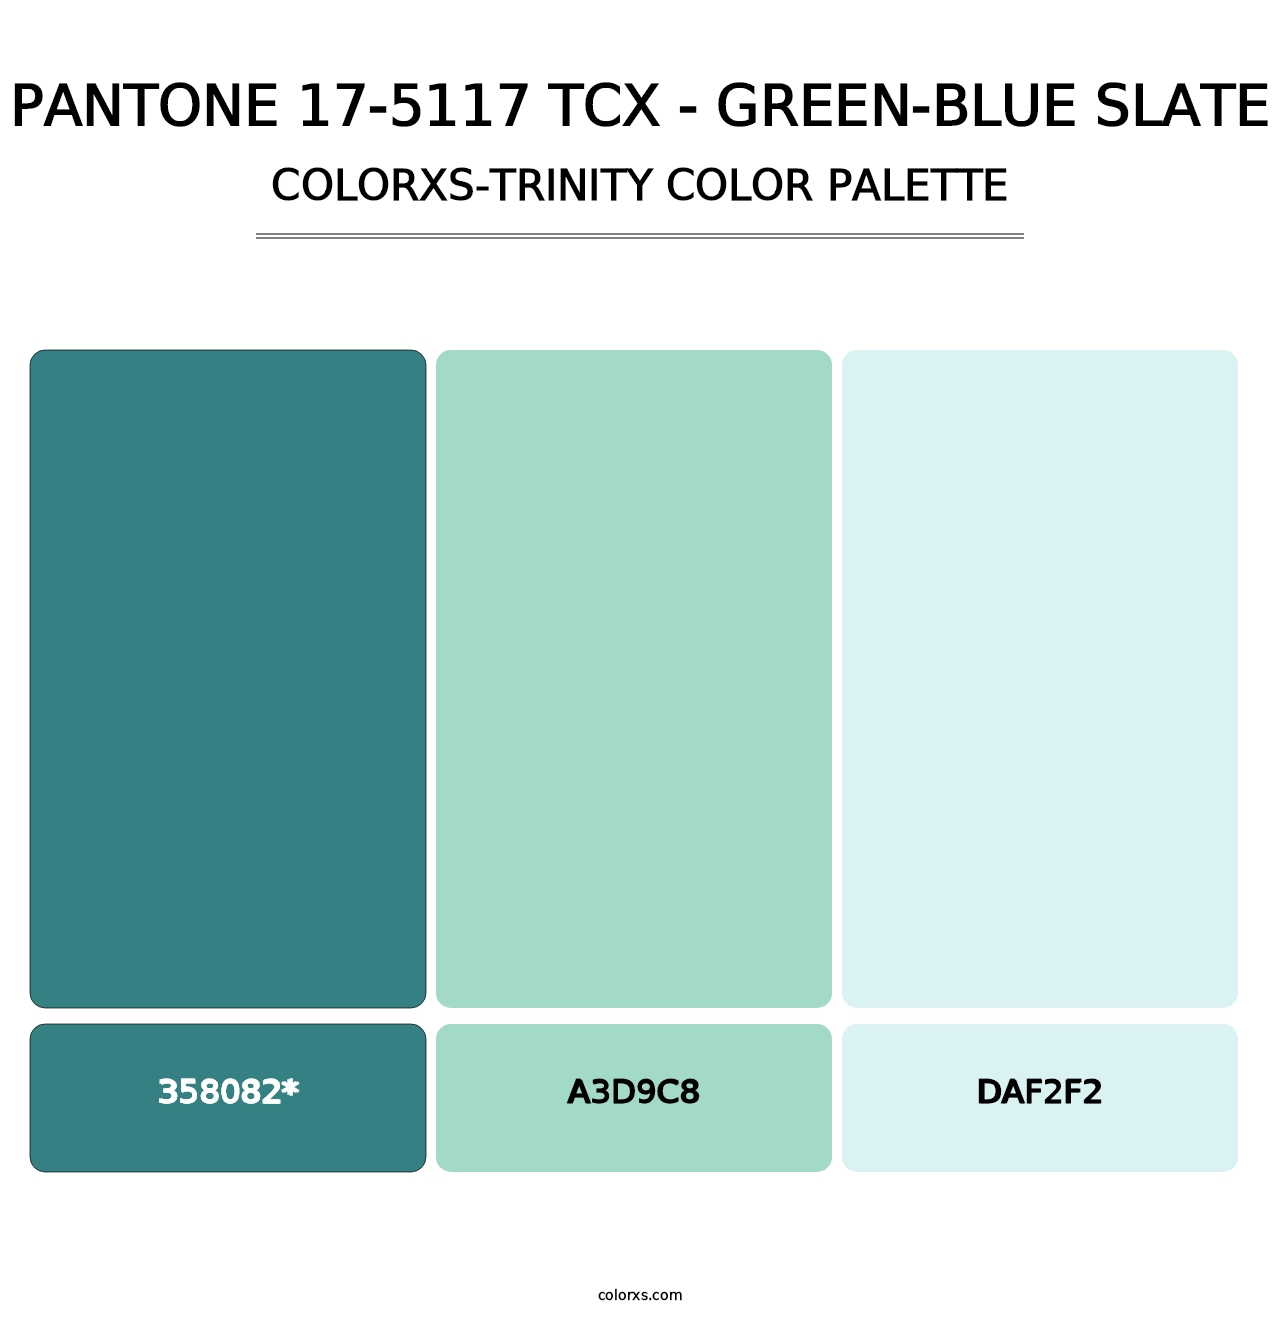 PANTONE 17-5117 TCX - Green-Blue Slate - Colorxs Trinity Palette